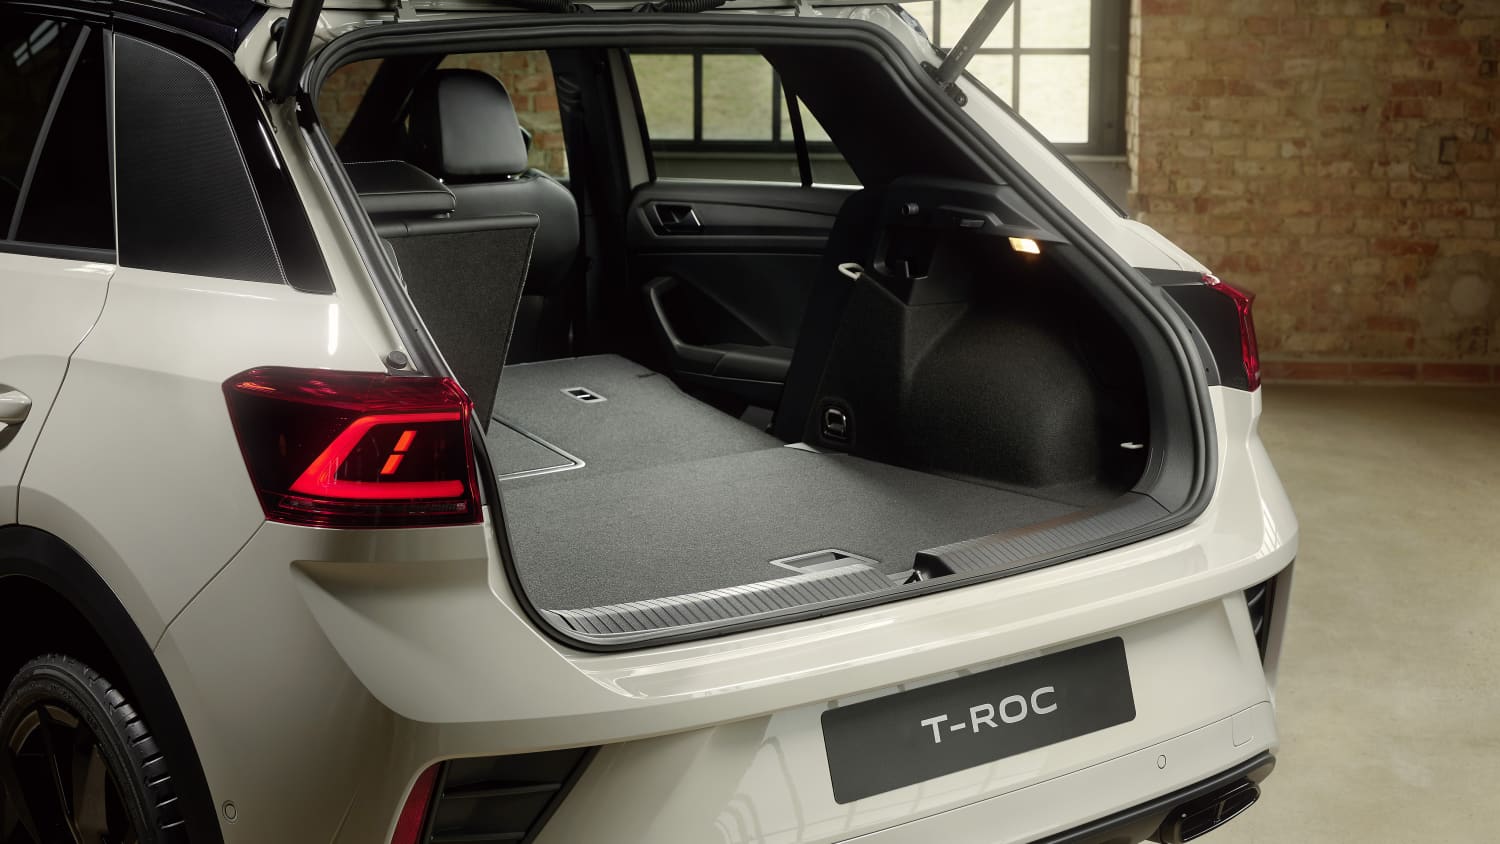 VW T-Roc Kofferraumvolumen  Maße des Kofferraums aller Modelle